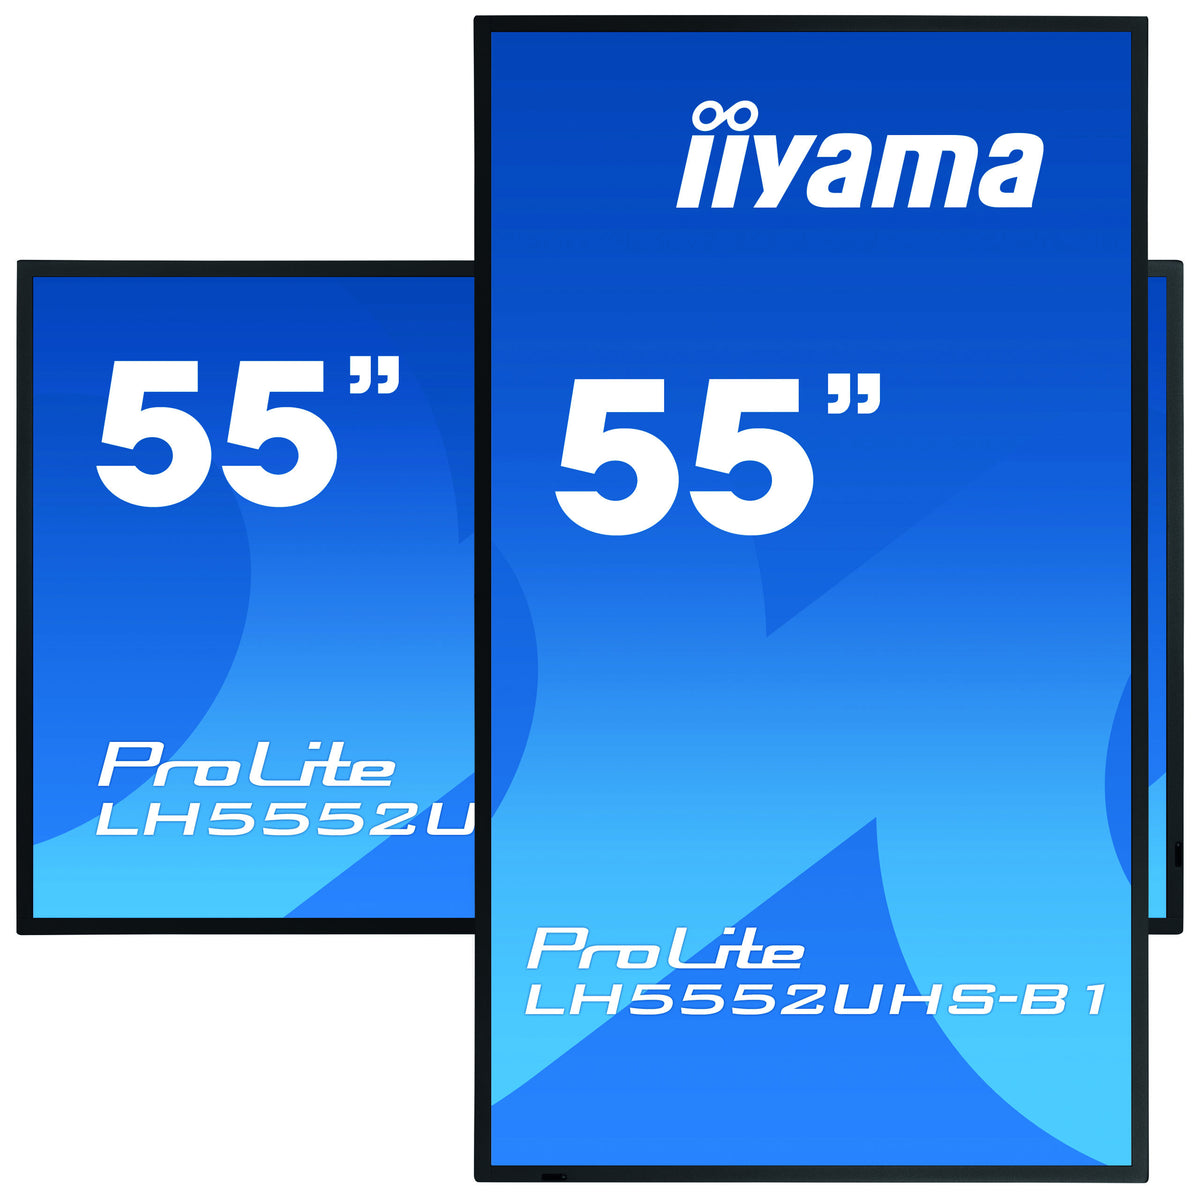 iiyama ProLite LH5552UHS-B1 - 55" Diagonal Class (54.6" viewable) LCD Display with LED Backlight - Digital Signage - Android - 4K UHD (2160p) 3840 x 2160 - Opaque Black